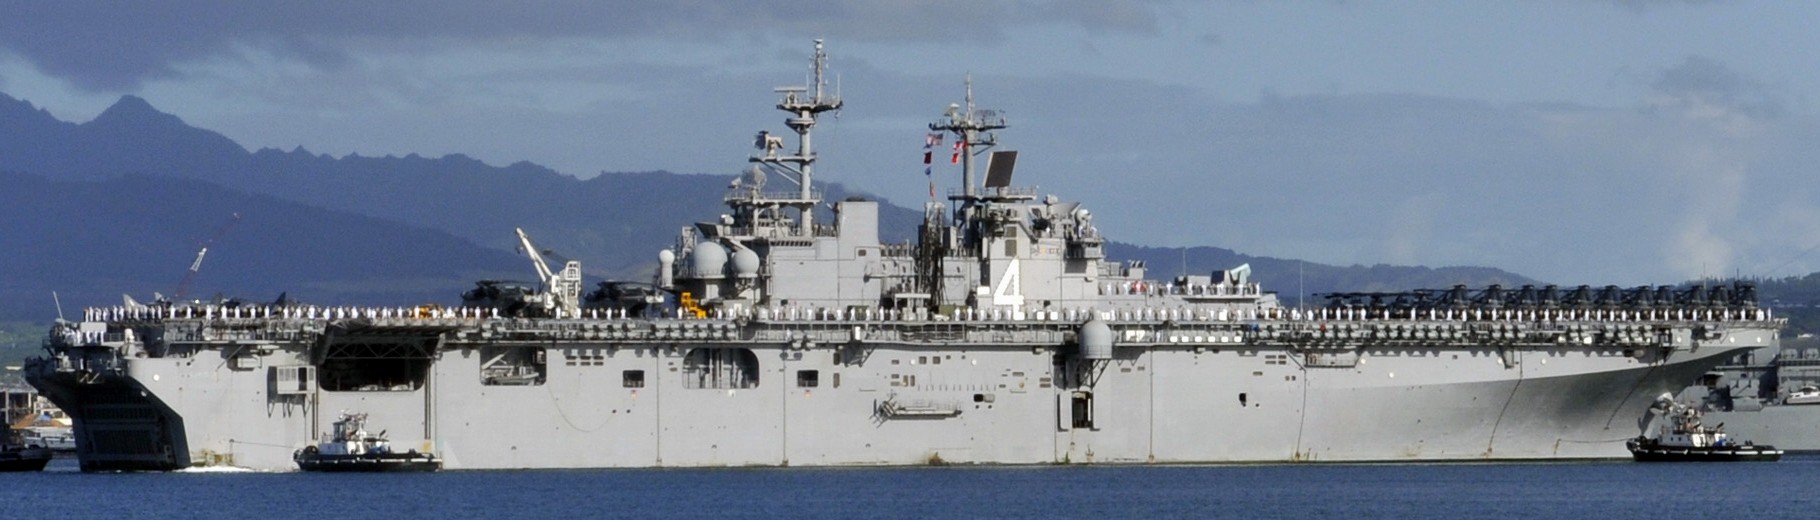 lhd-4 uss boxer wasp class amphibious assault ship dock landing us navy marines hmm-163 pearl harbor hickam hawaii 66